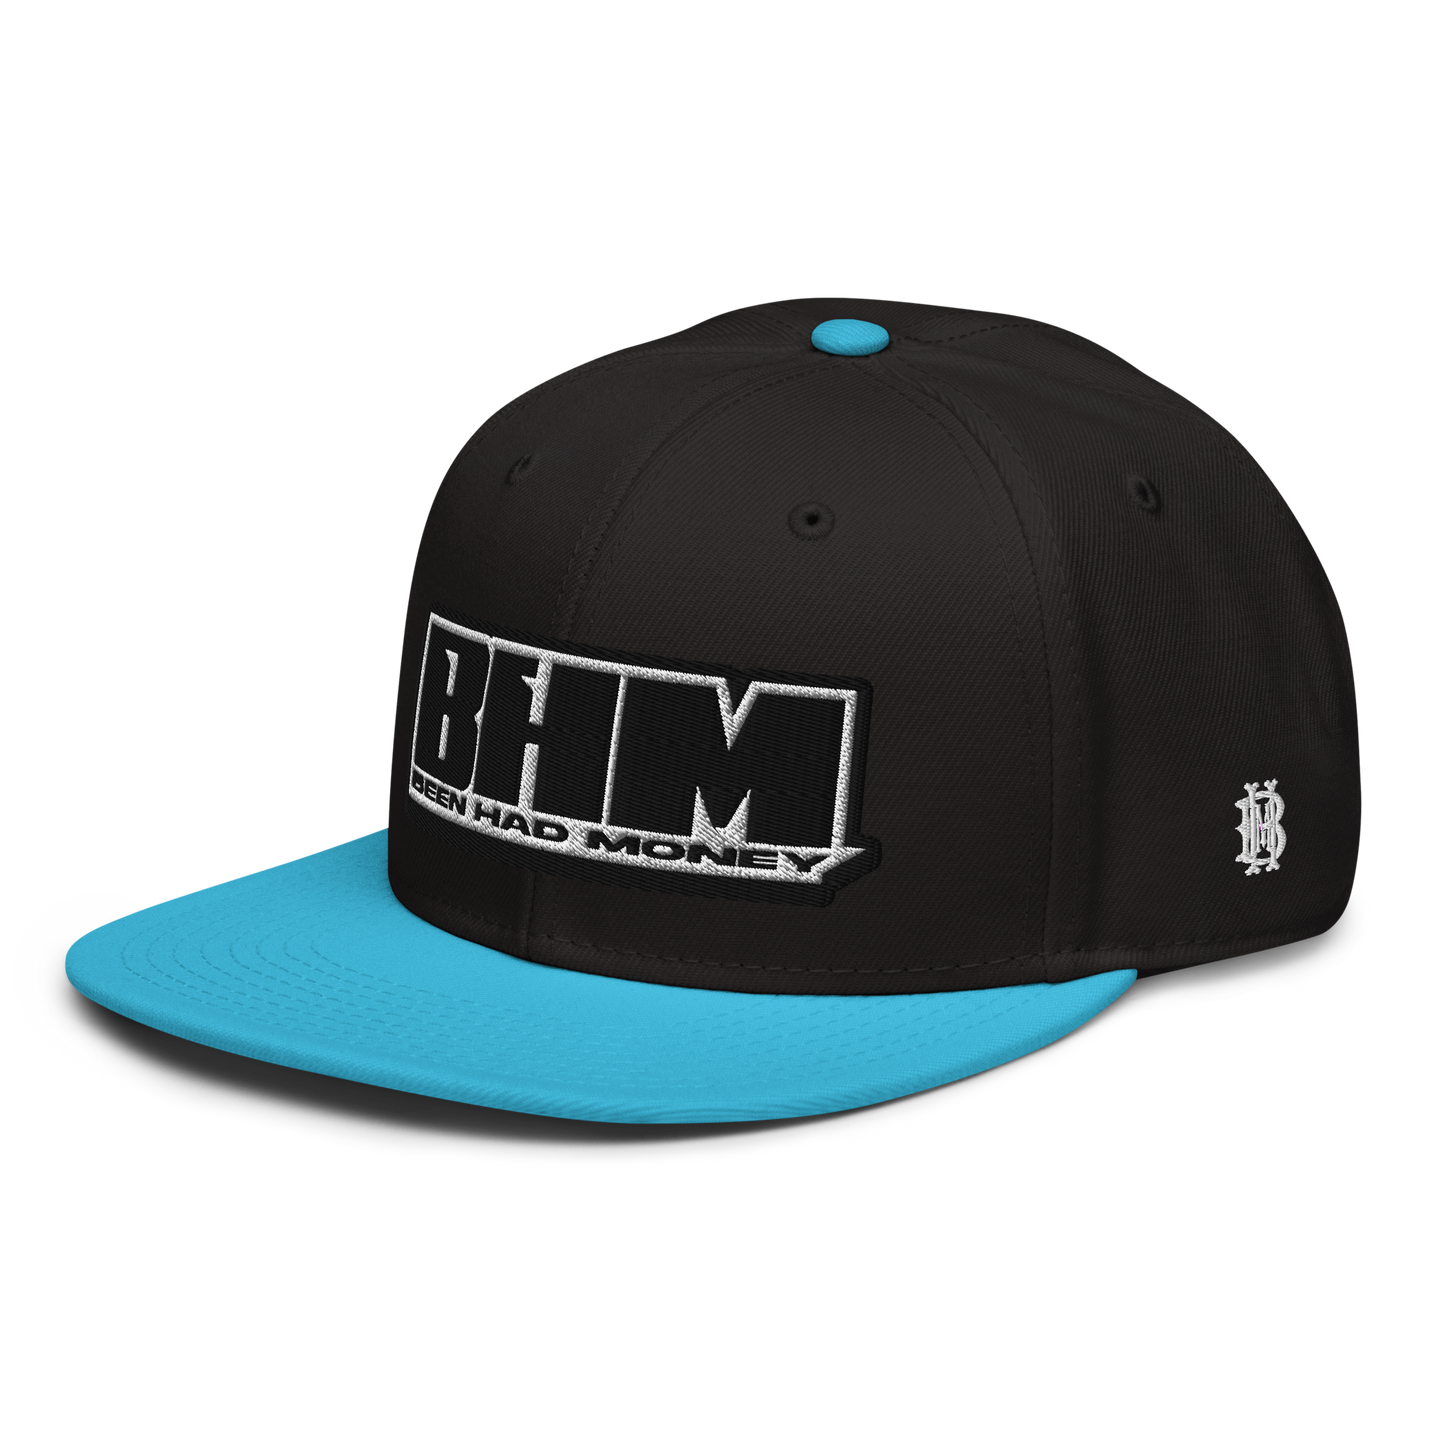 BHM Snapback Hat